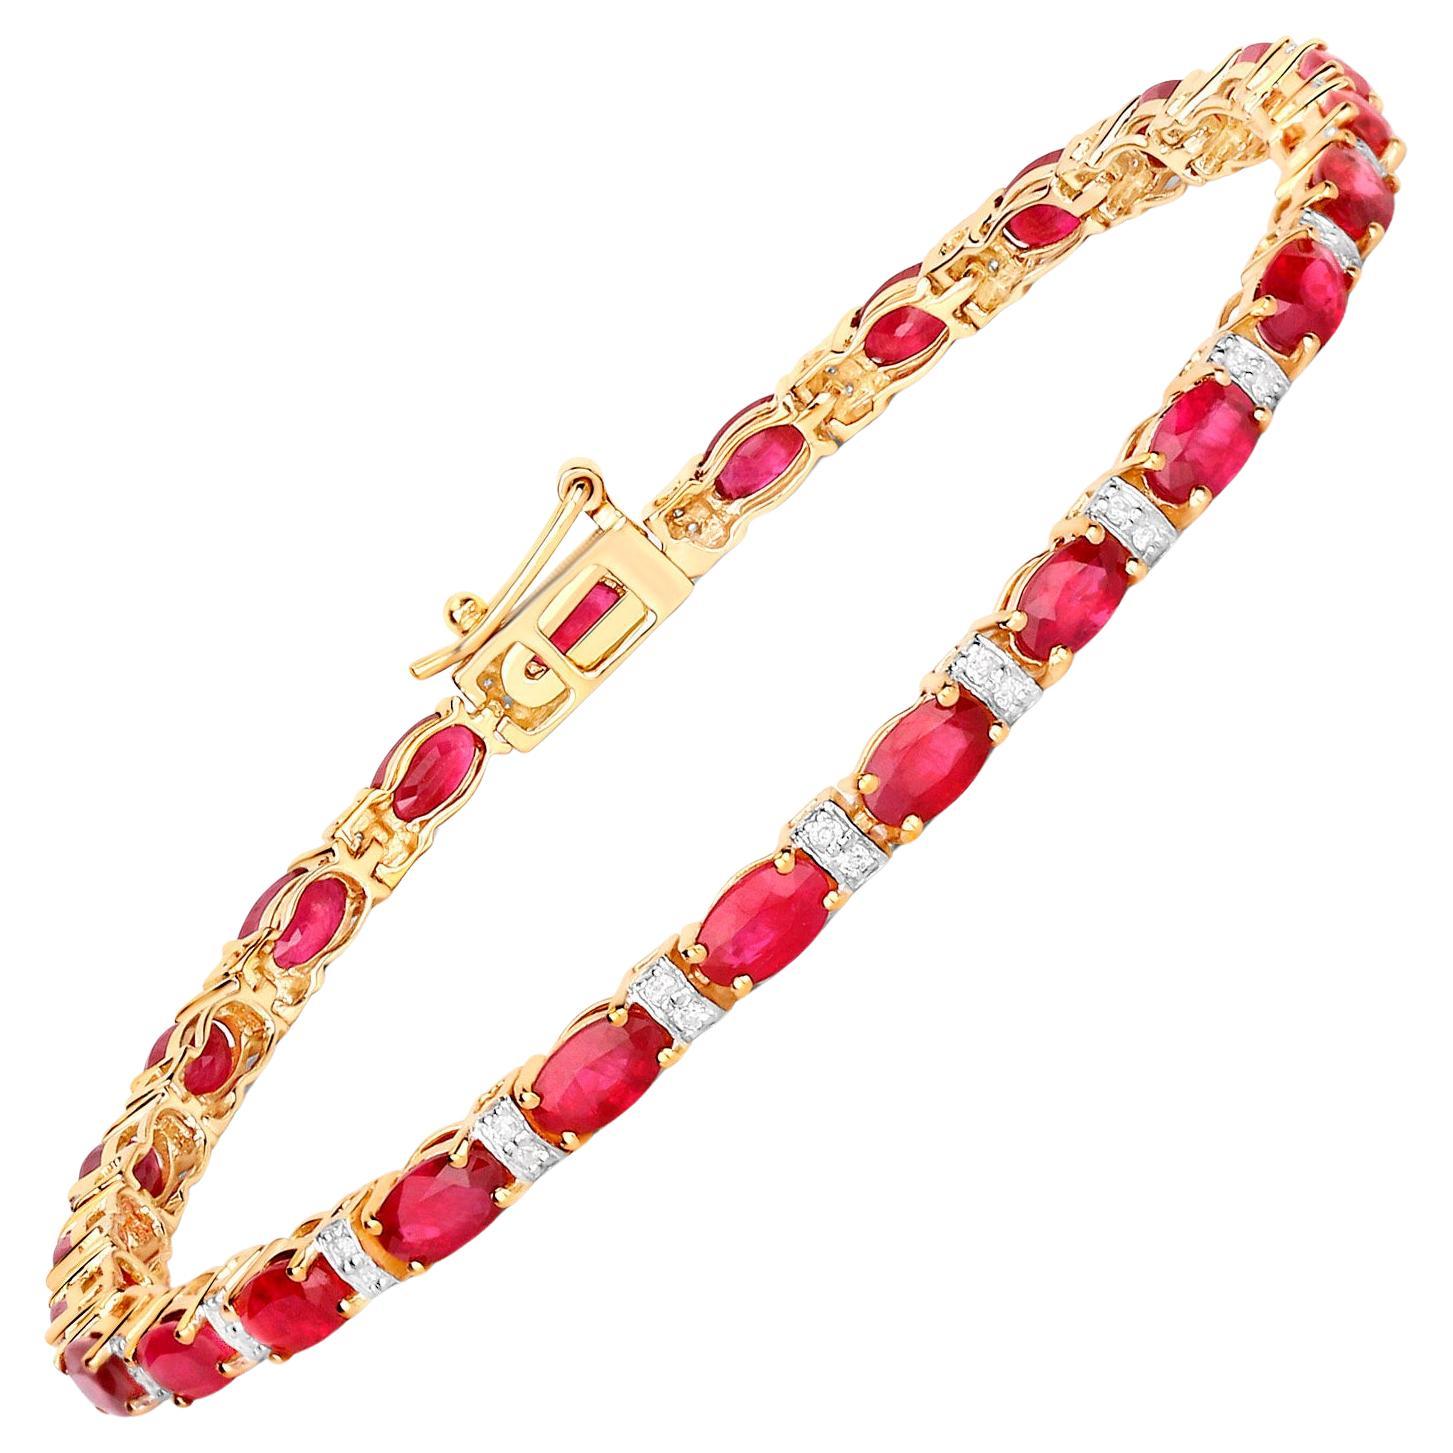 Ruby Tennis Bracelet Diamond Links 7 Carats 14K Yellow Gold